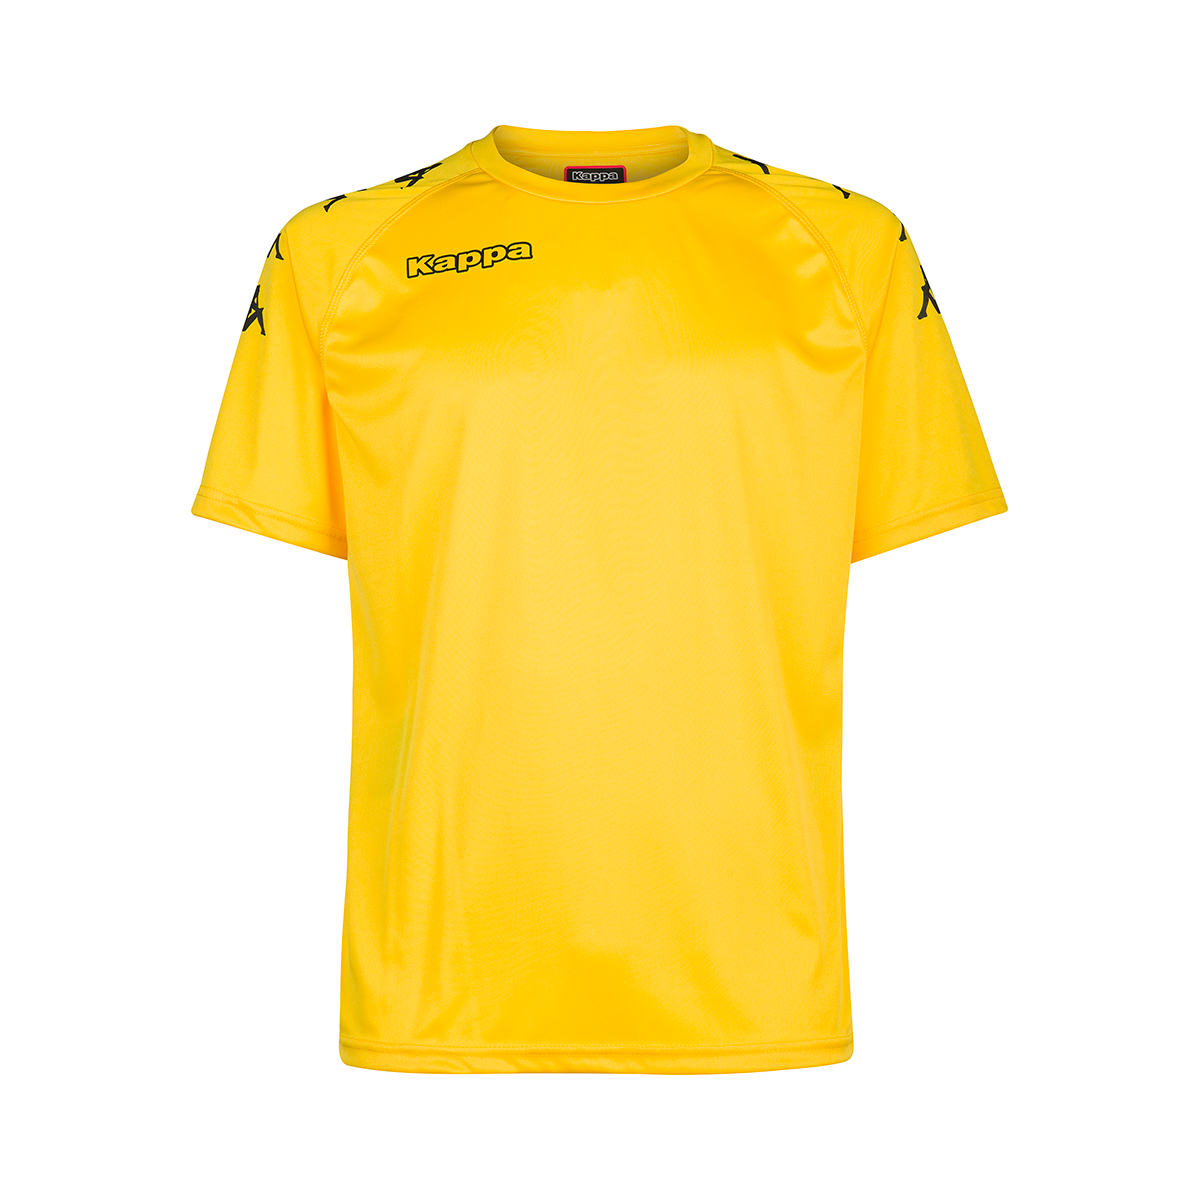 Camiseta Castolo Amarillo Niños - Imagen 3